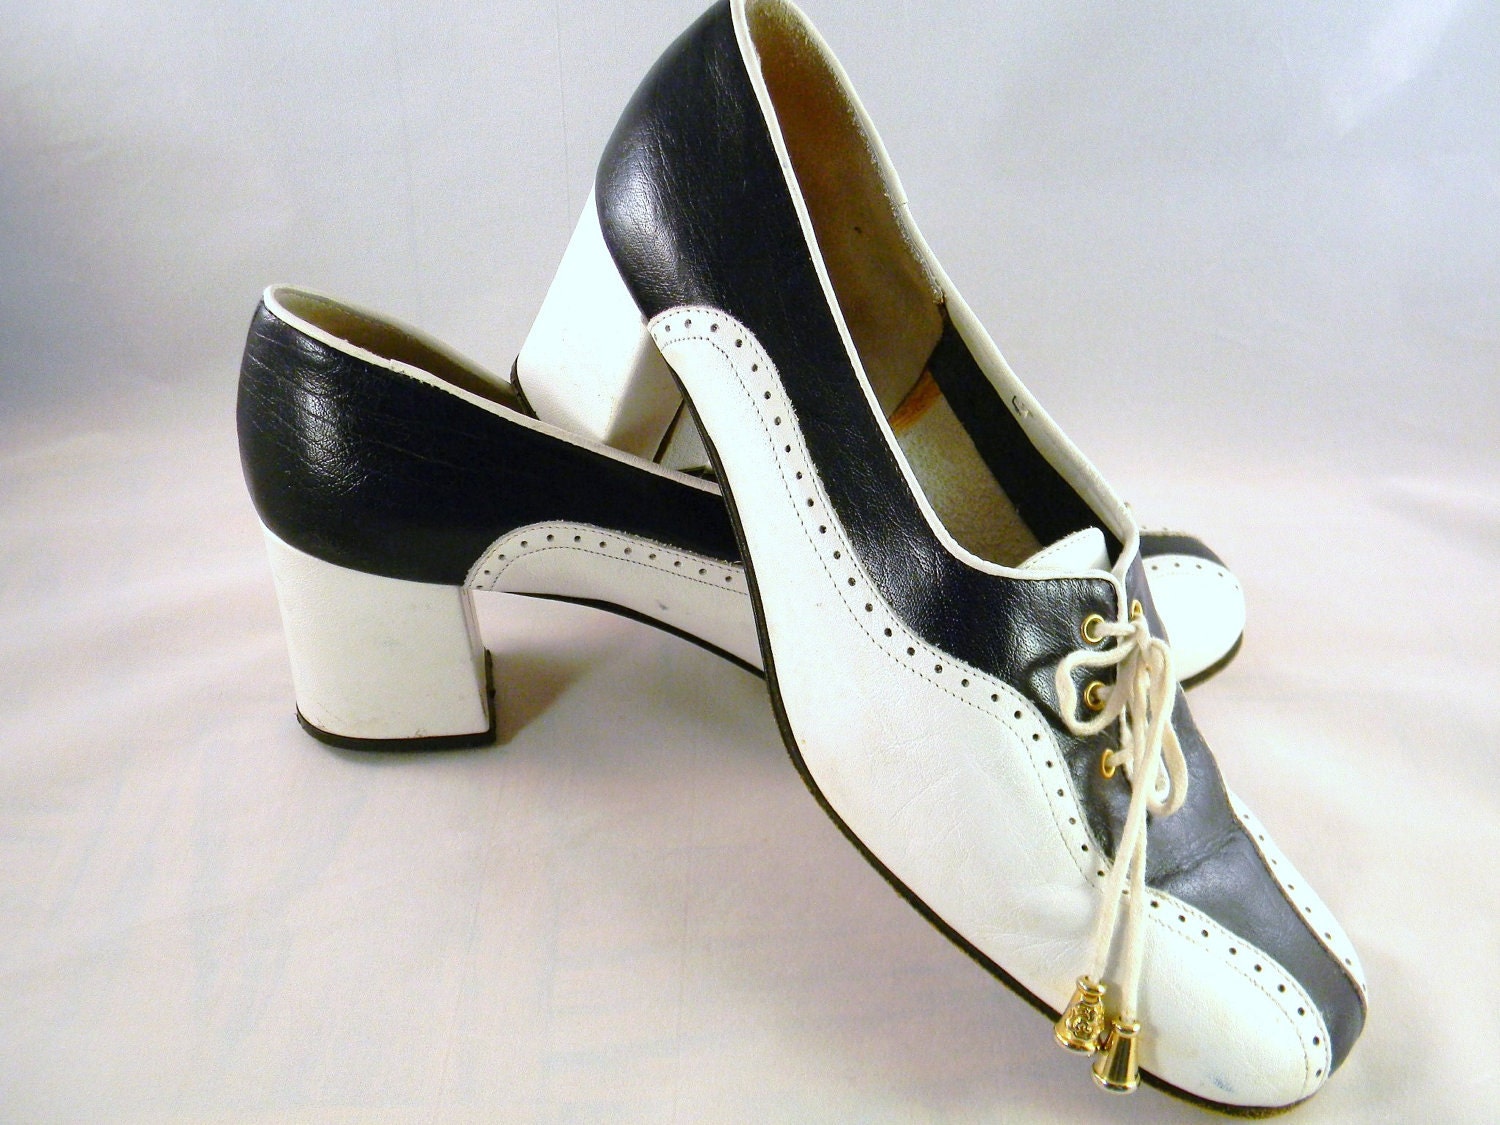 Vintage Spectator Shoes John Romain Navy White Made in Italy